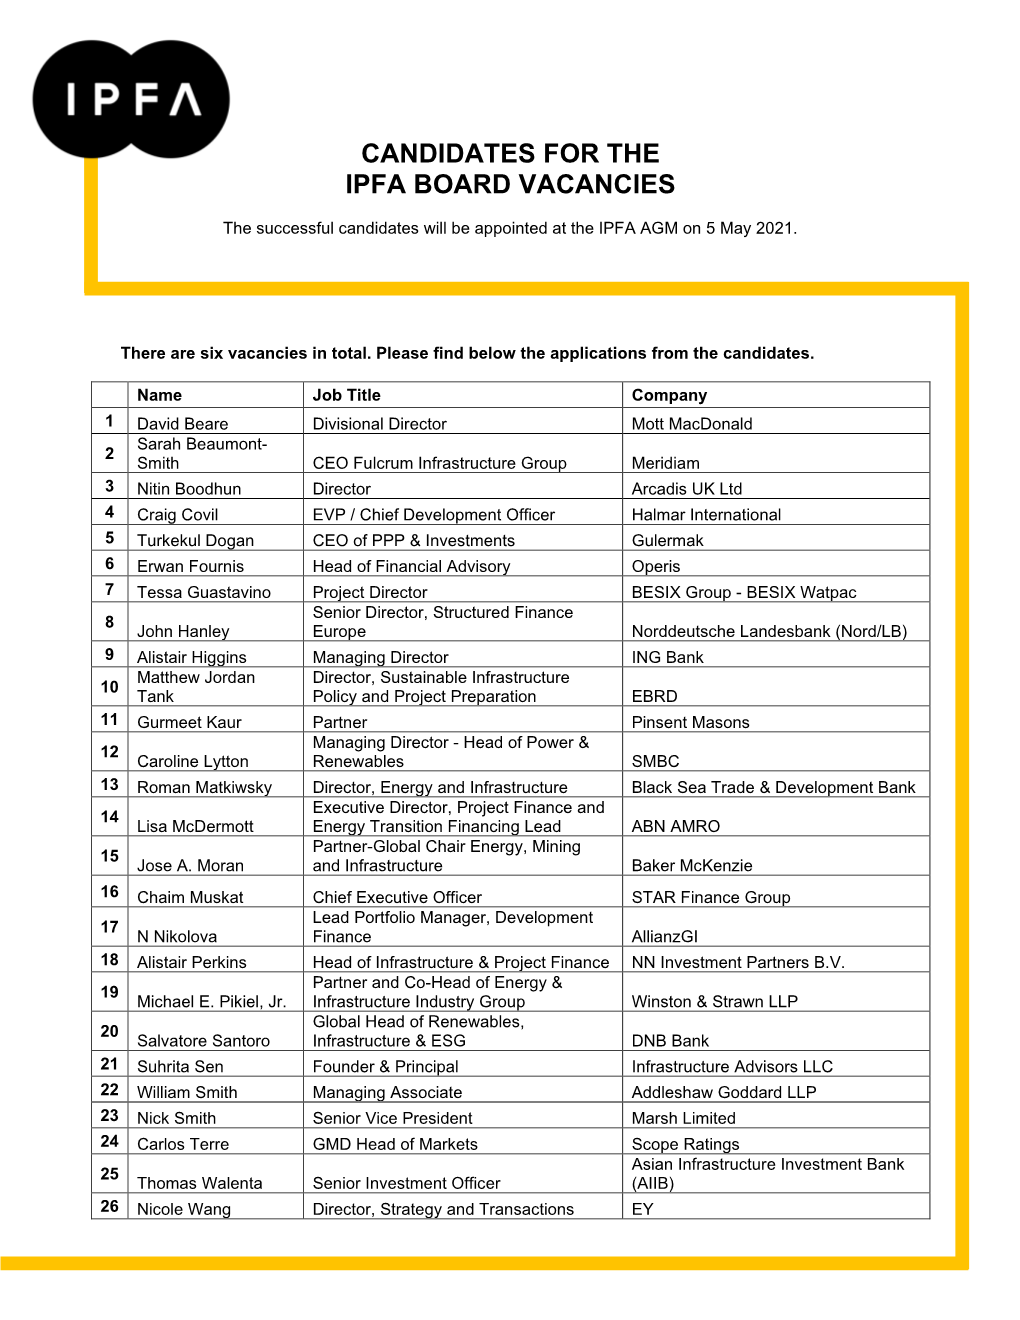 Candidates for the Ipfa Board Vacancies